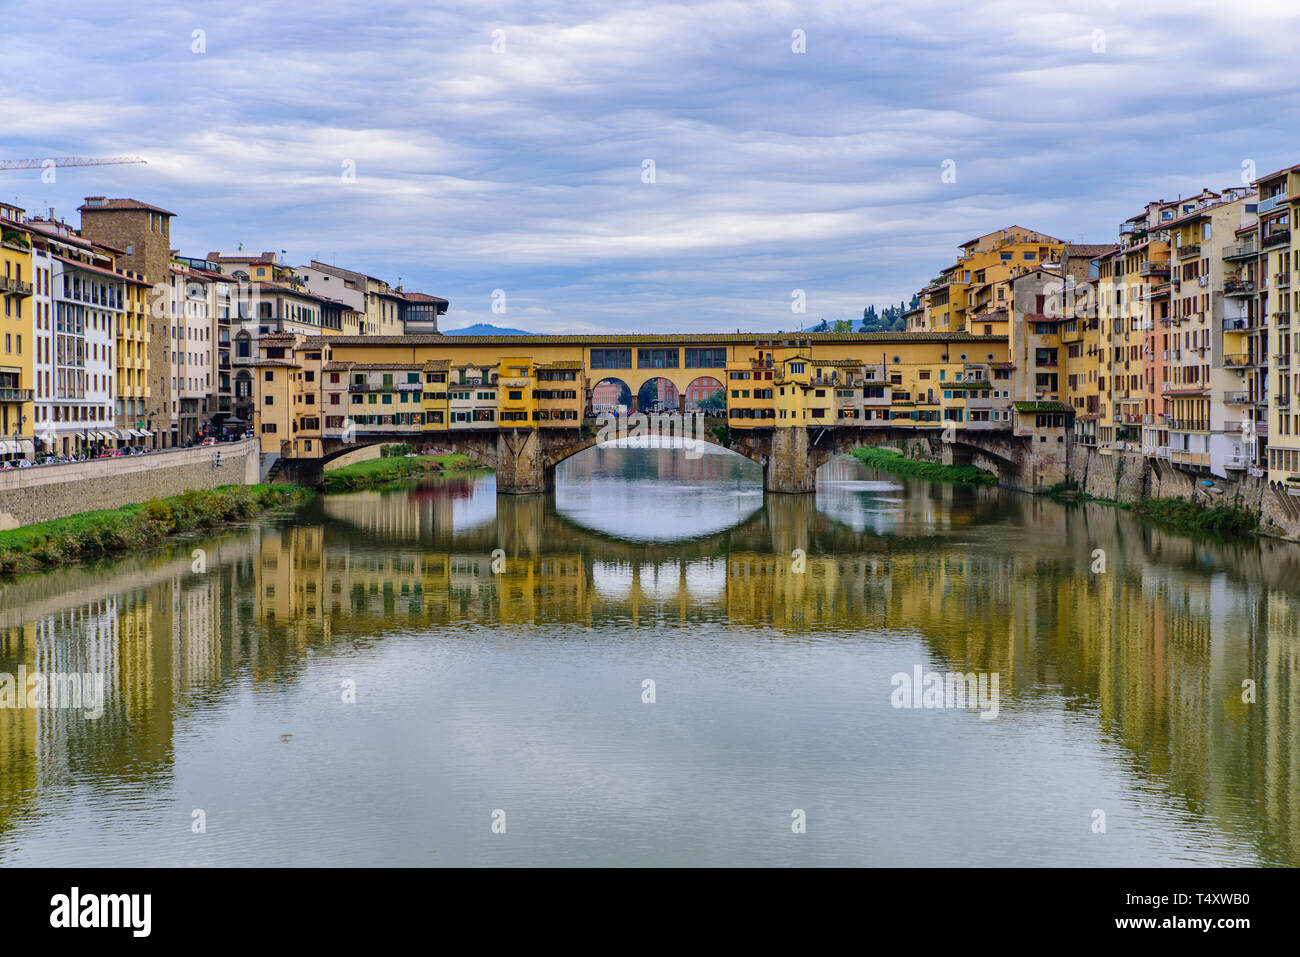 Ponte Vecchio (Old Bridge), a medieval stone bridge with shops on it, Florence, Italy Stock Photo